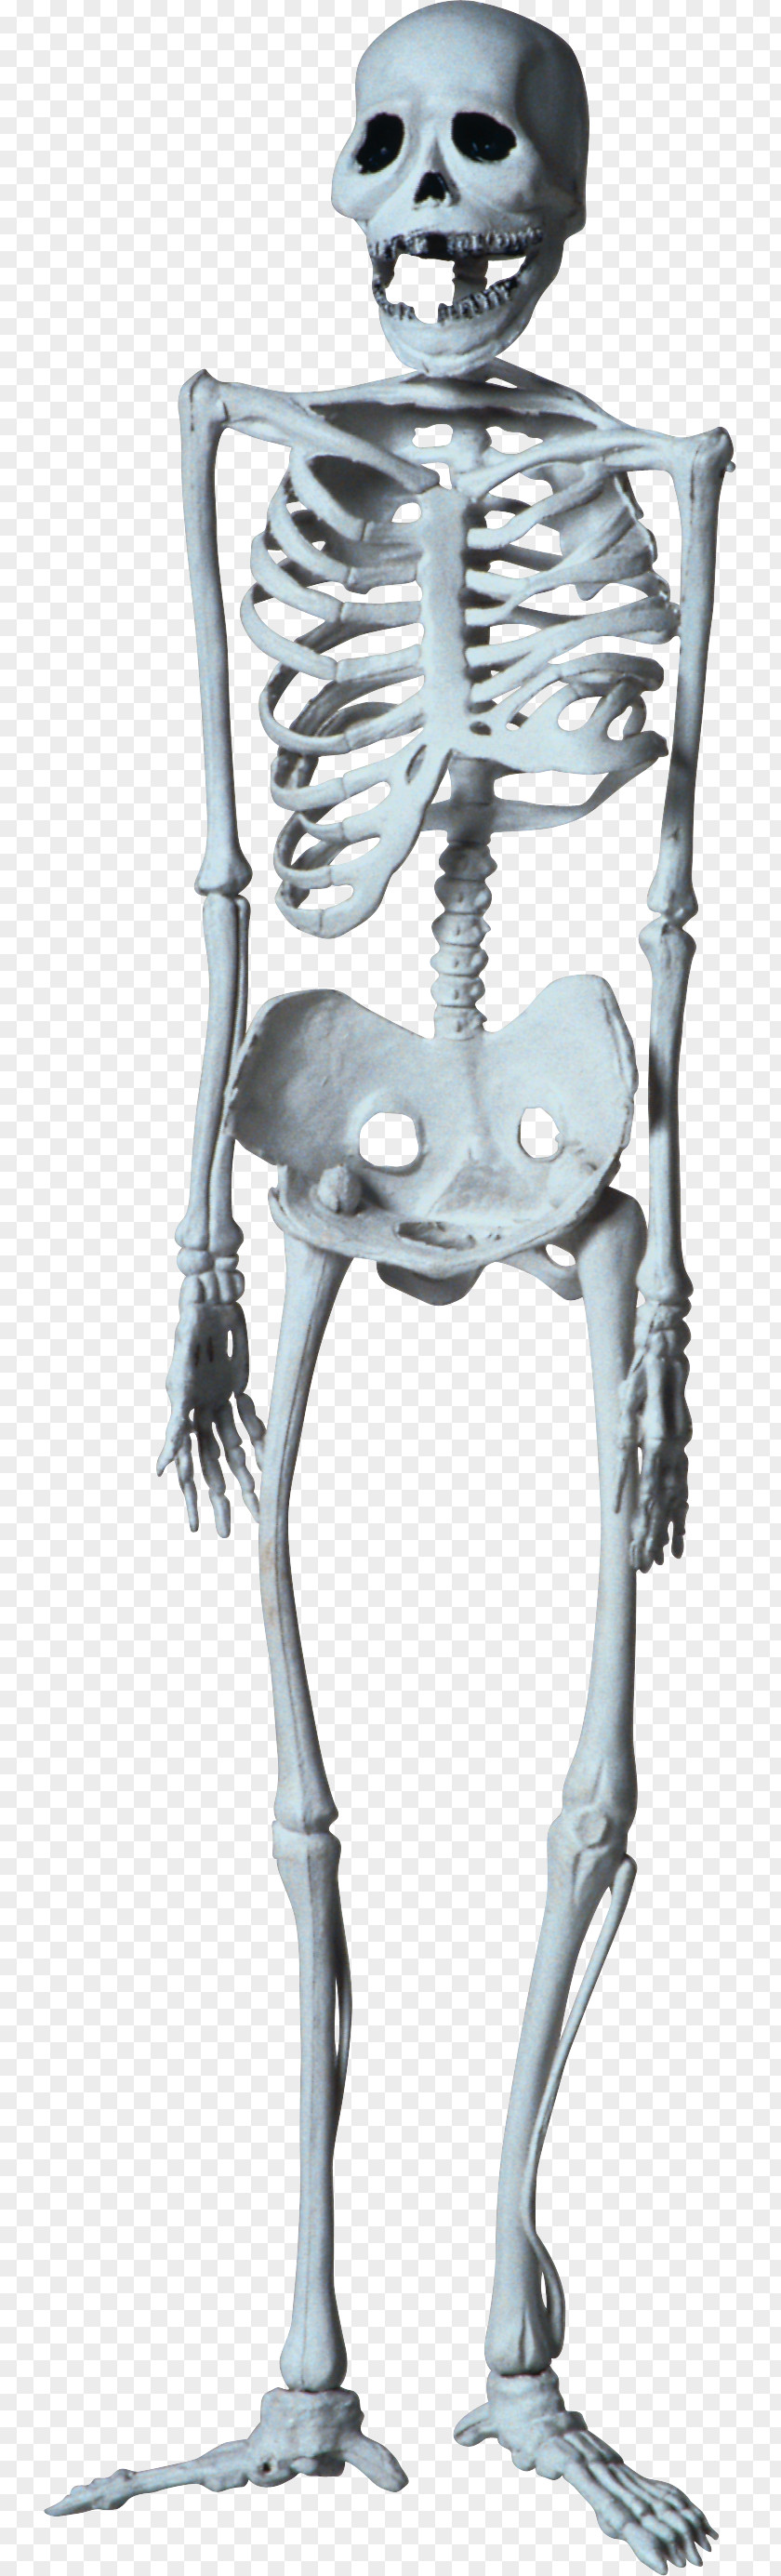 Skeleton Human Bone Clip Art PNG